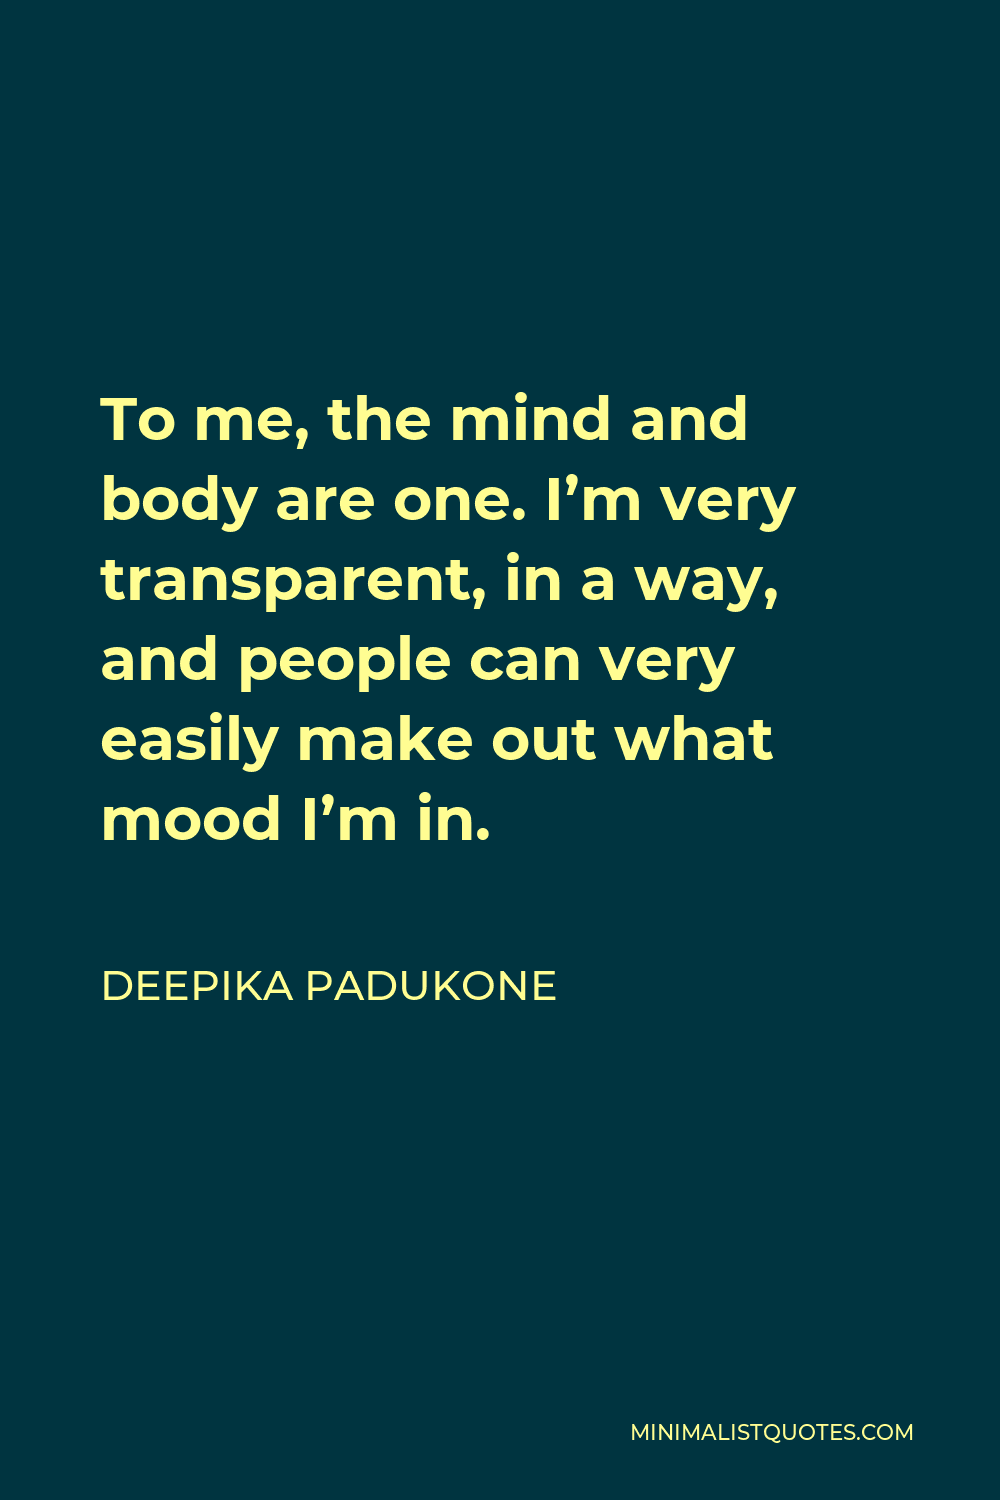 Deepika Padukone quote: I am enjoying myself and I do not mind the